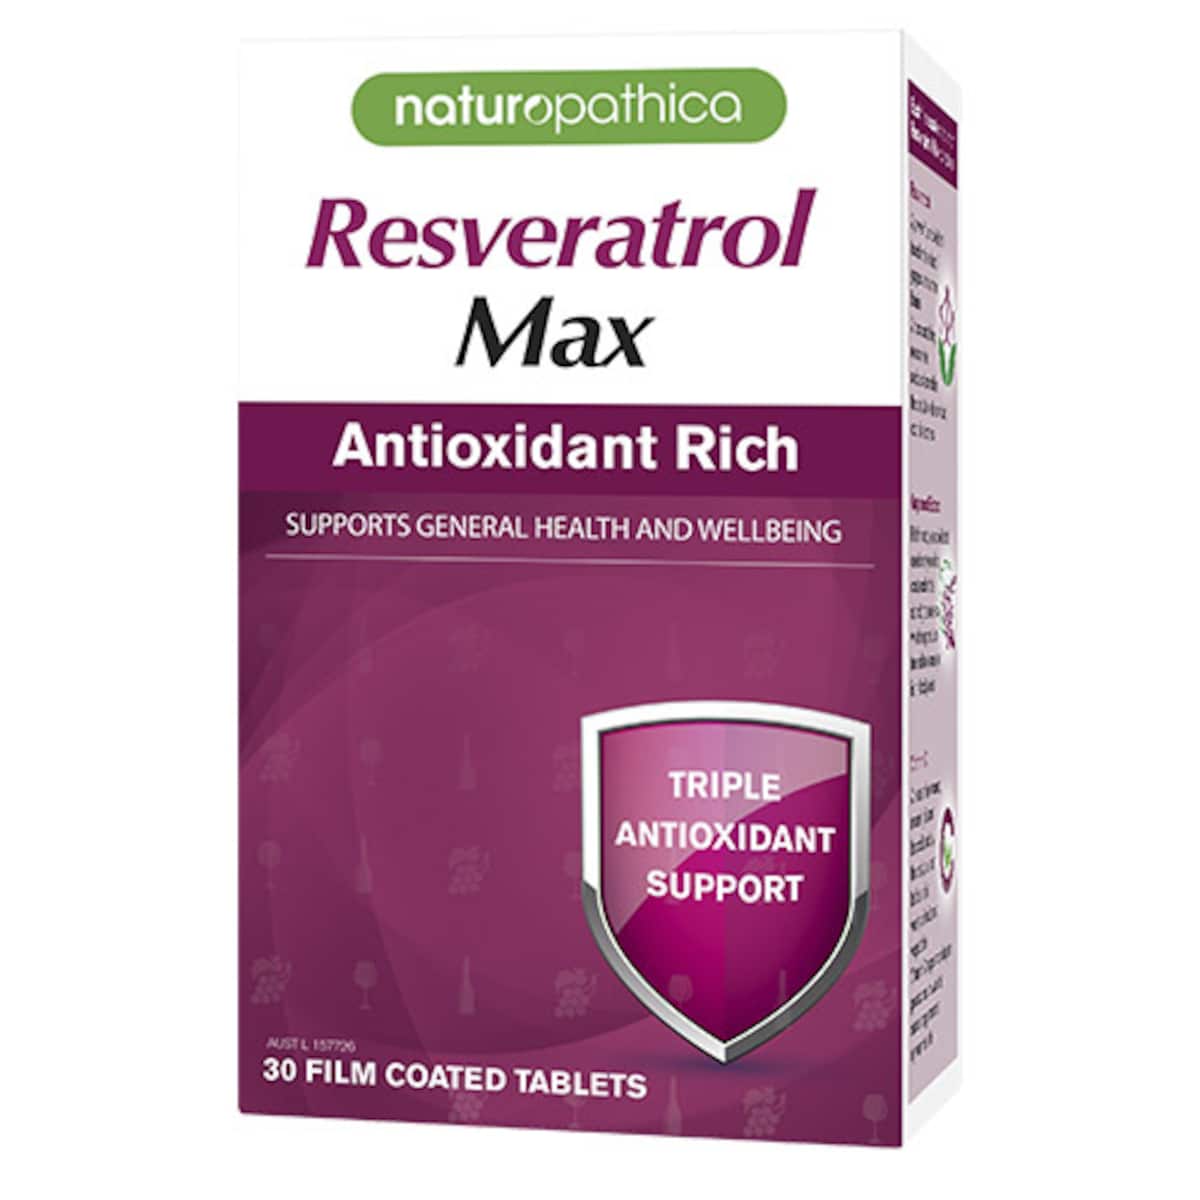 Naturopathica Resveratrol Max Antioxidant Rich 30 Tablets